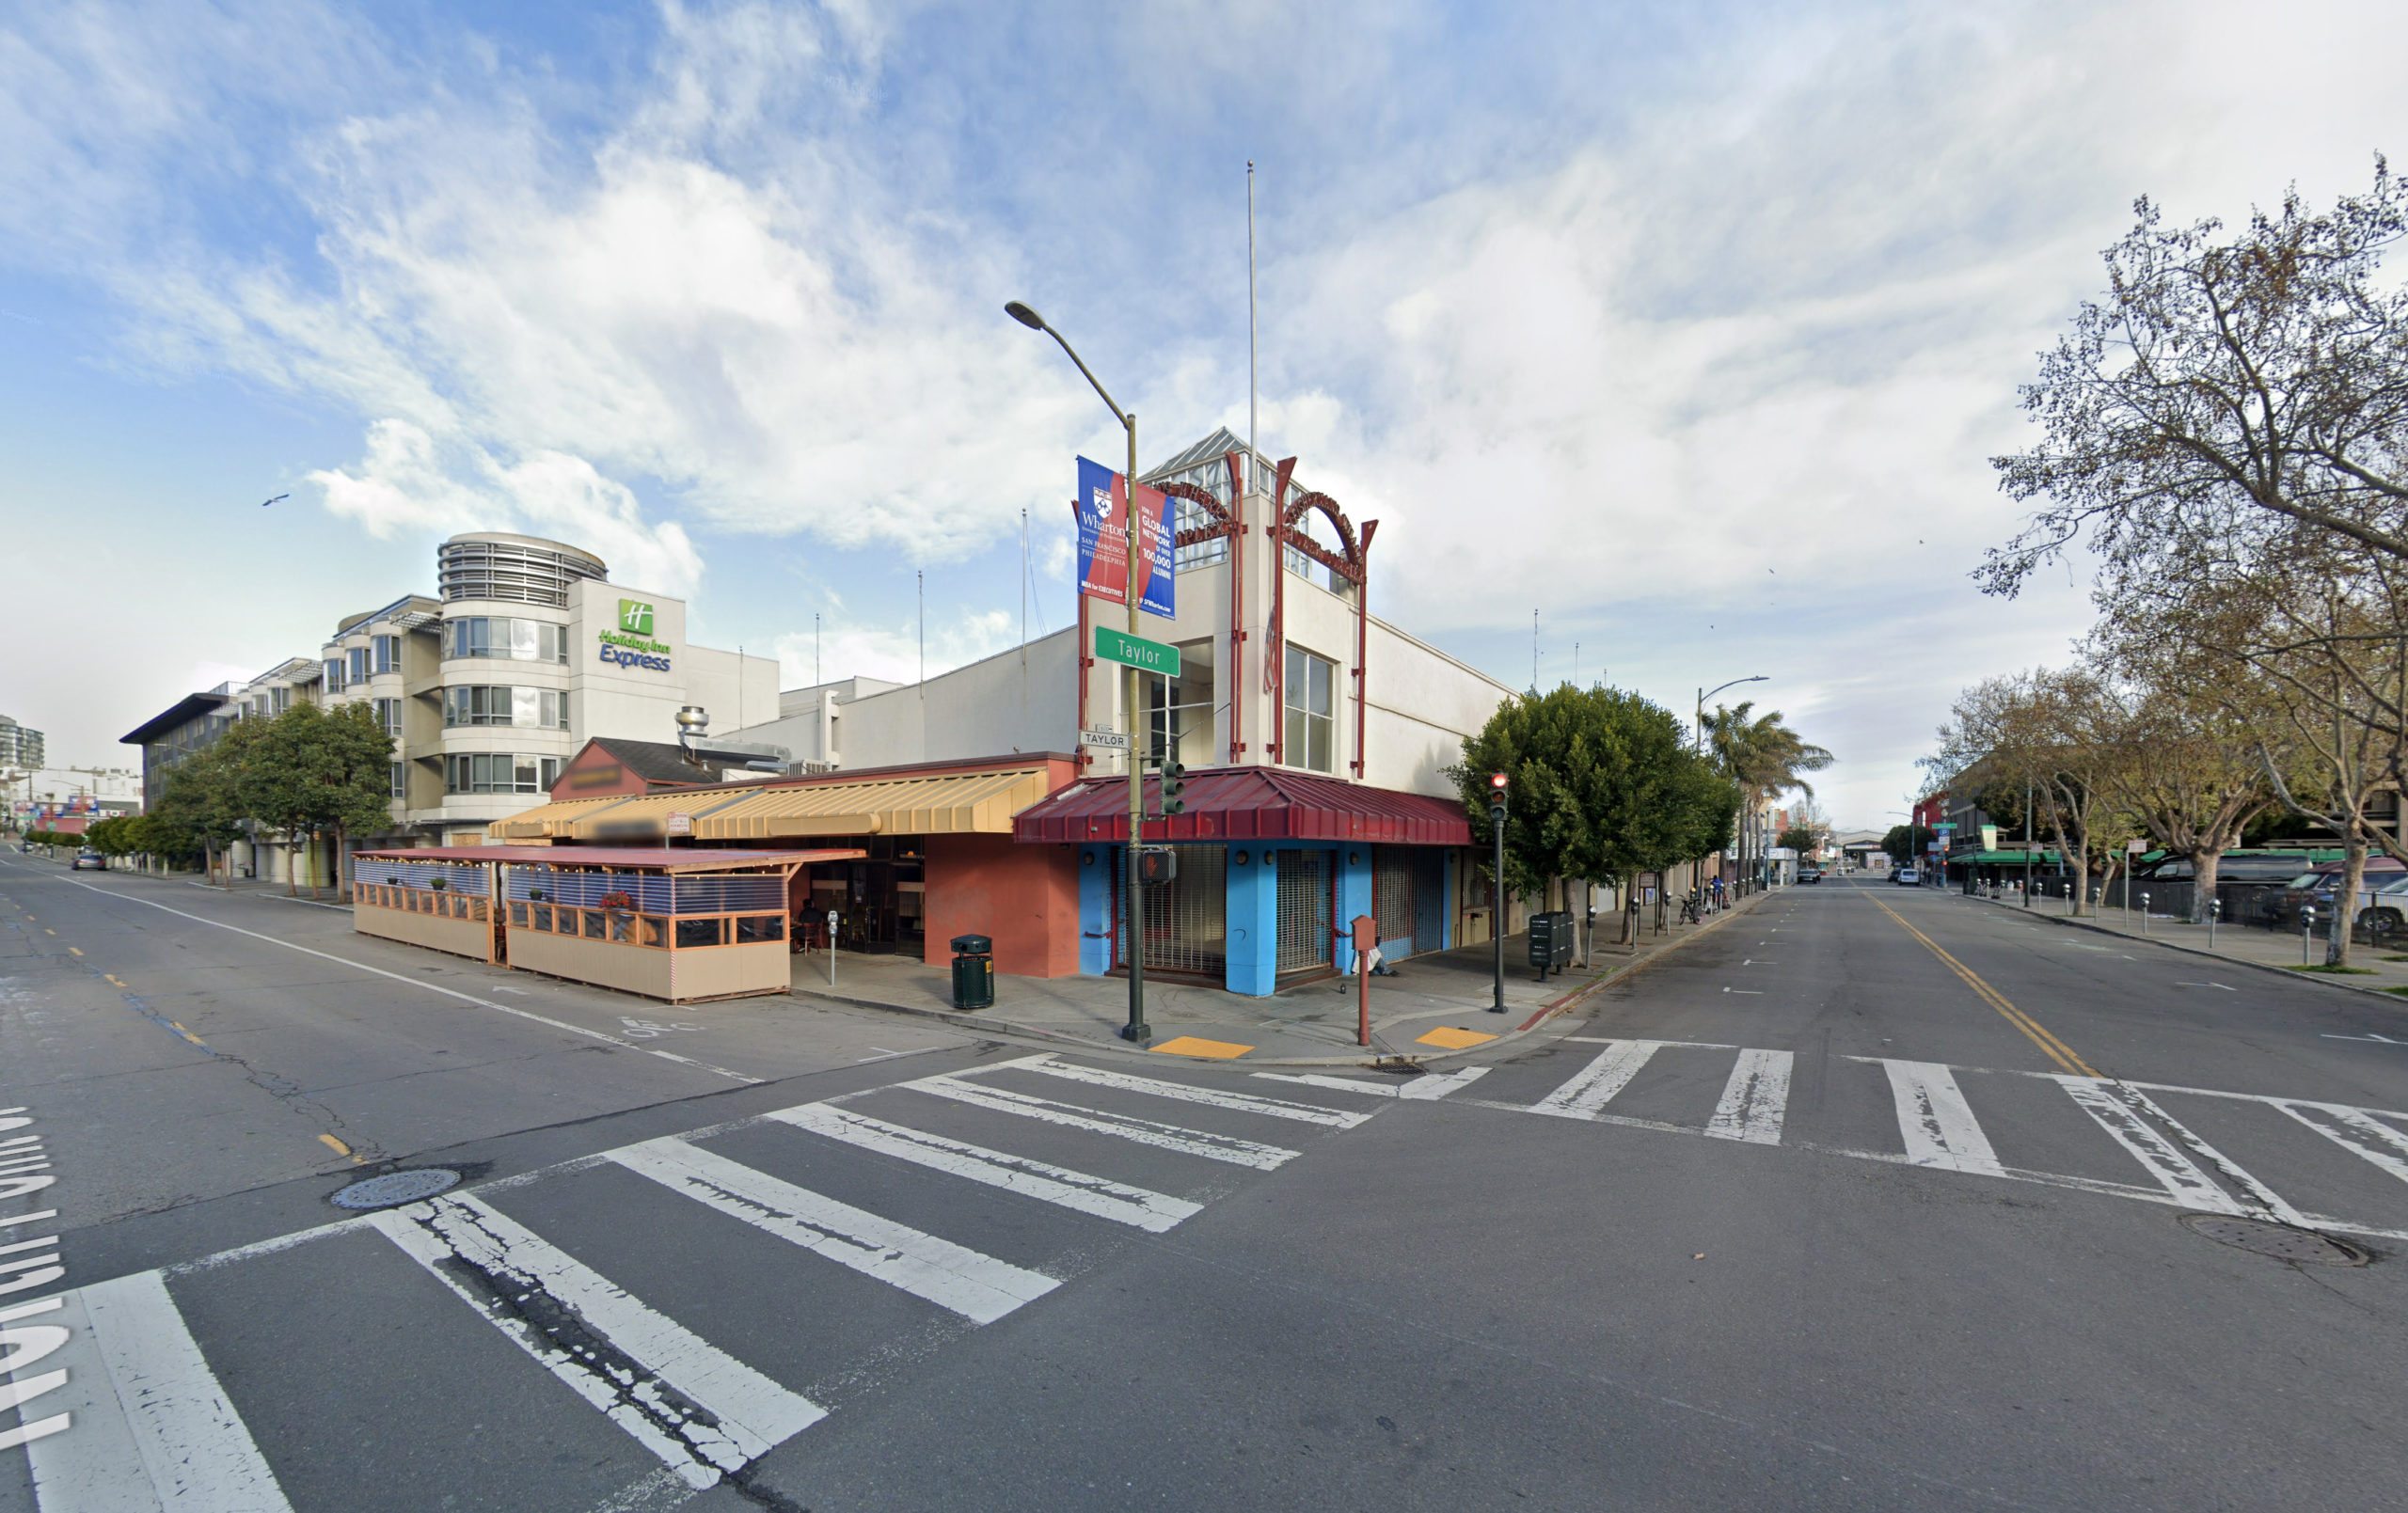 2629 Taylor Street, image via Google Street View